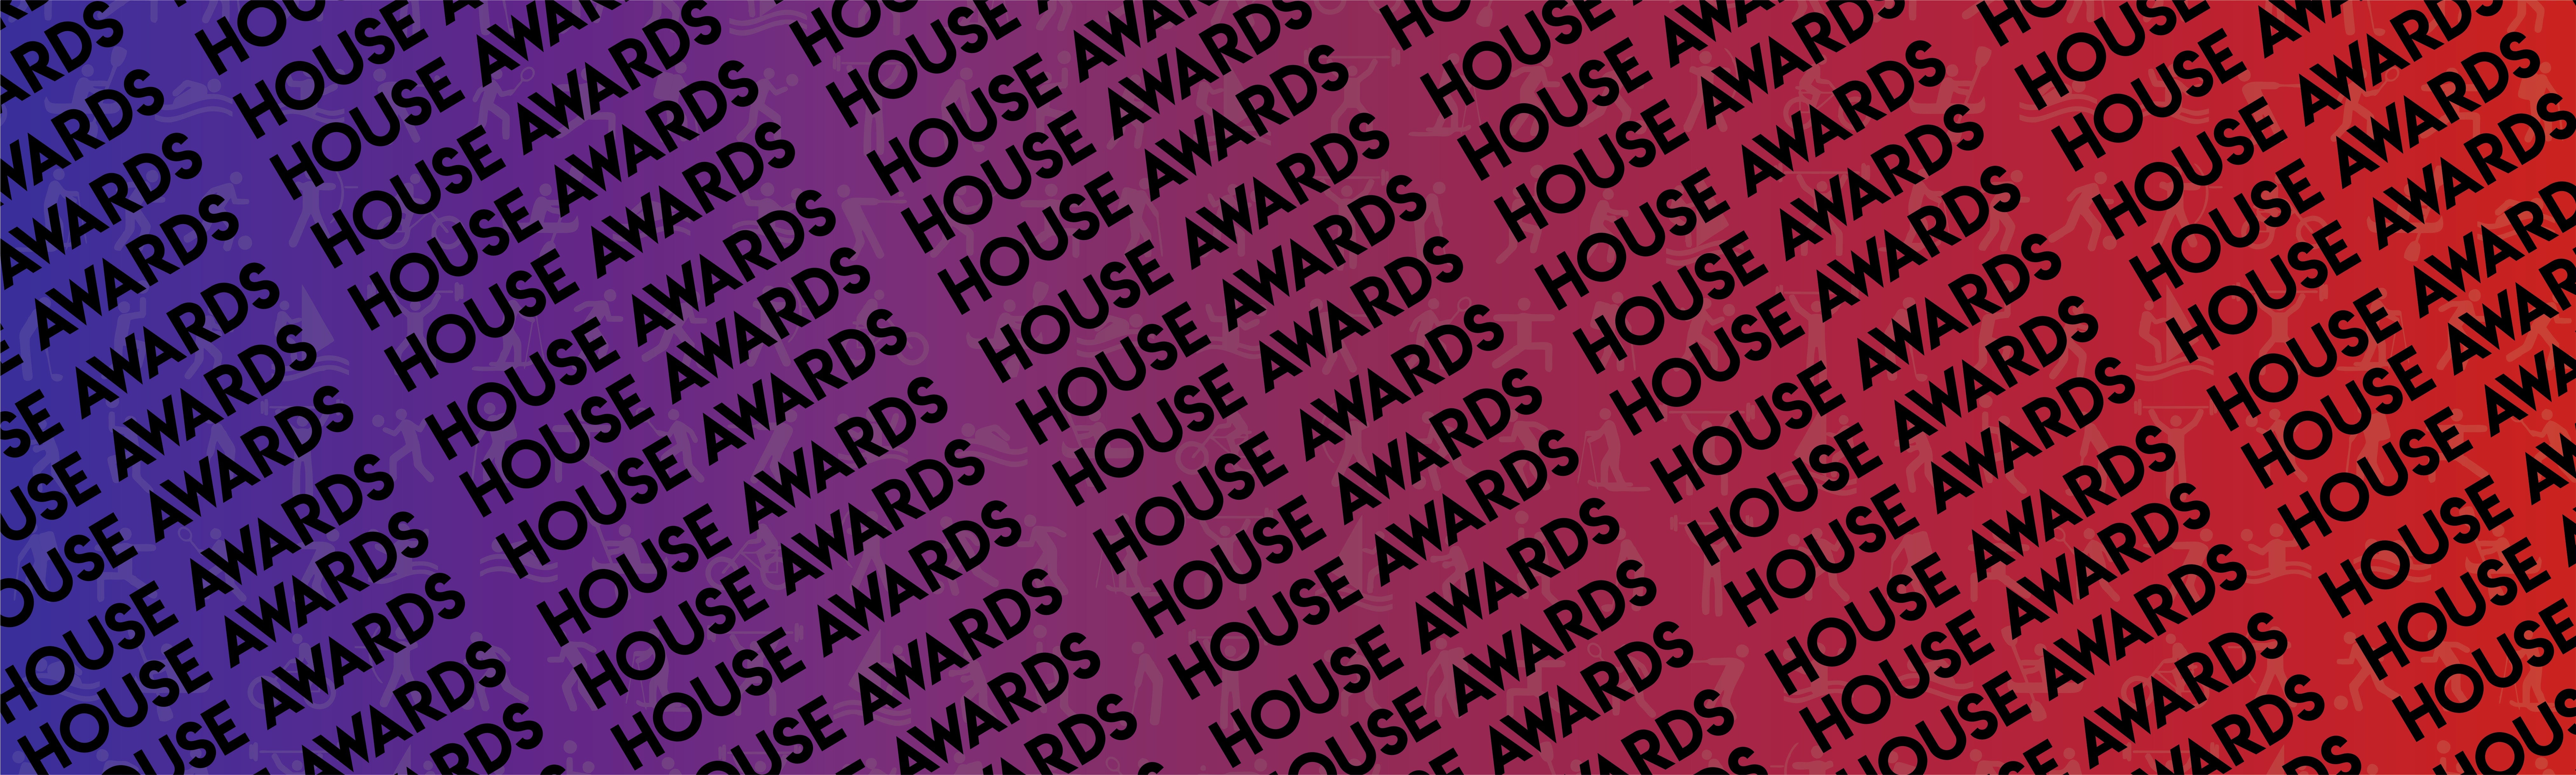 House Awards